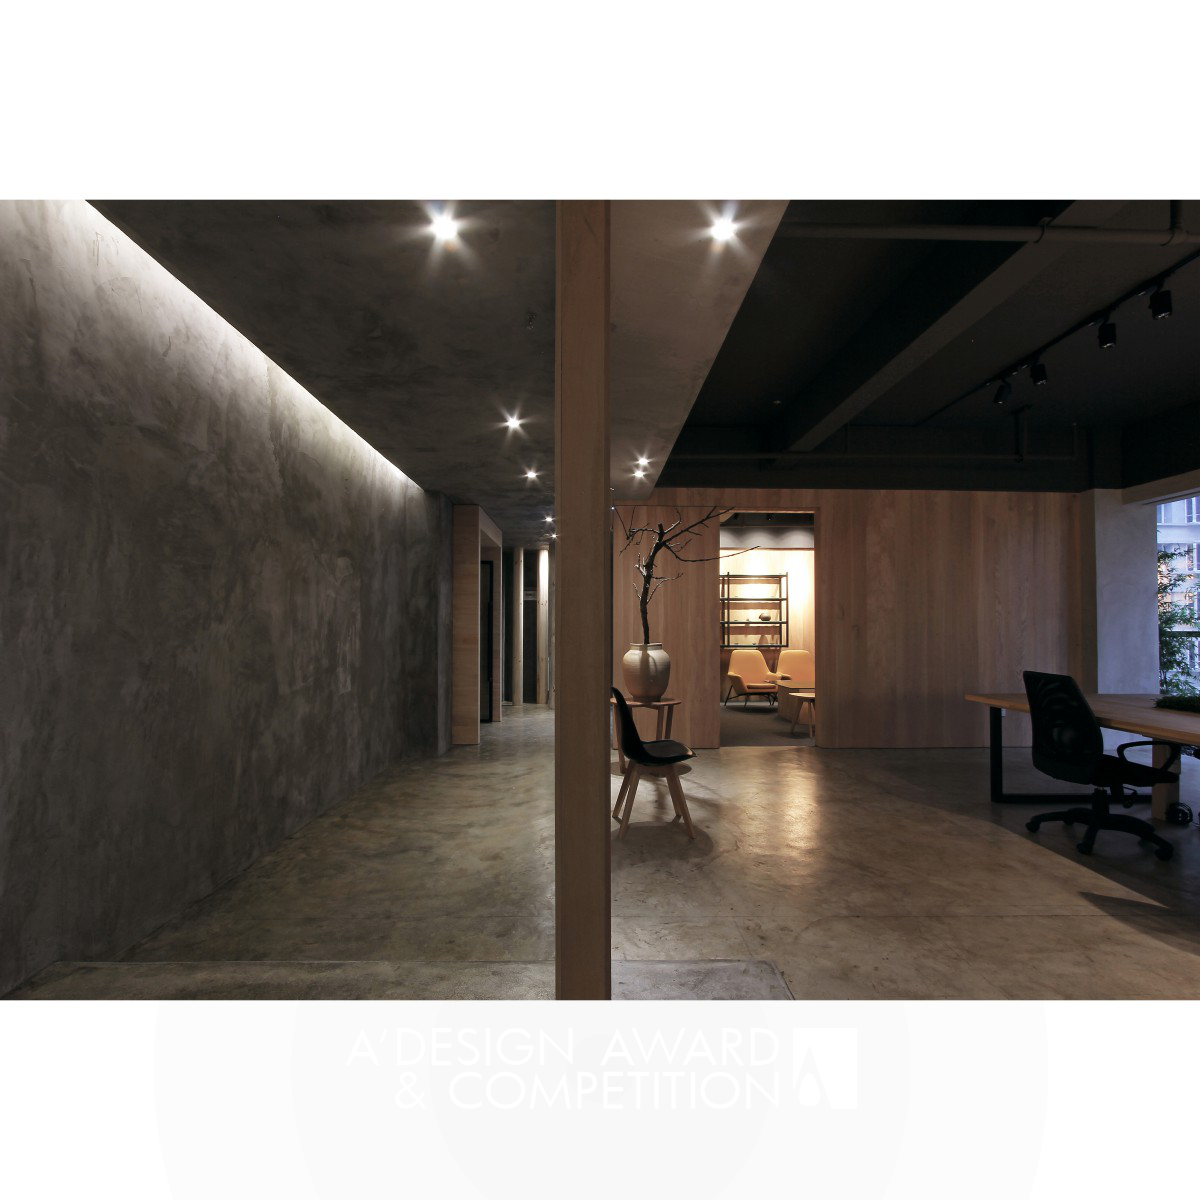 Zen-Inspired Office Design: A Sanctuary for Creativity